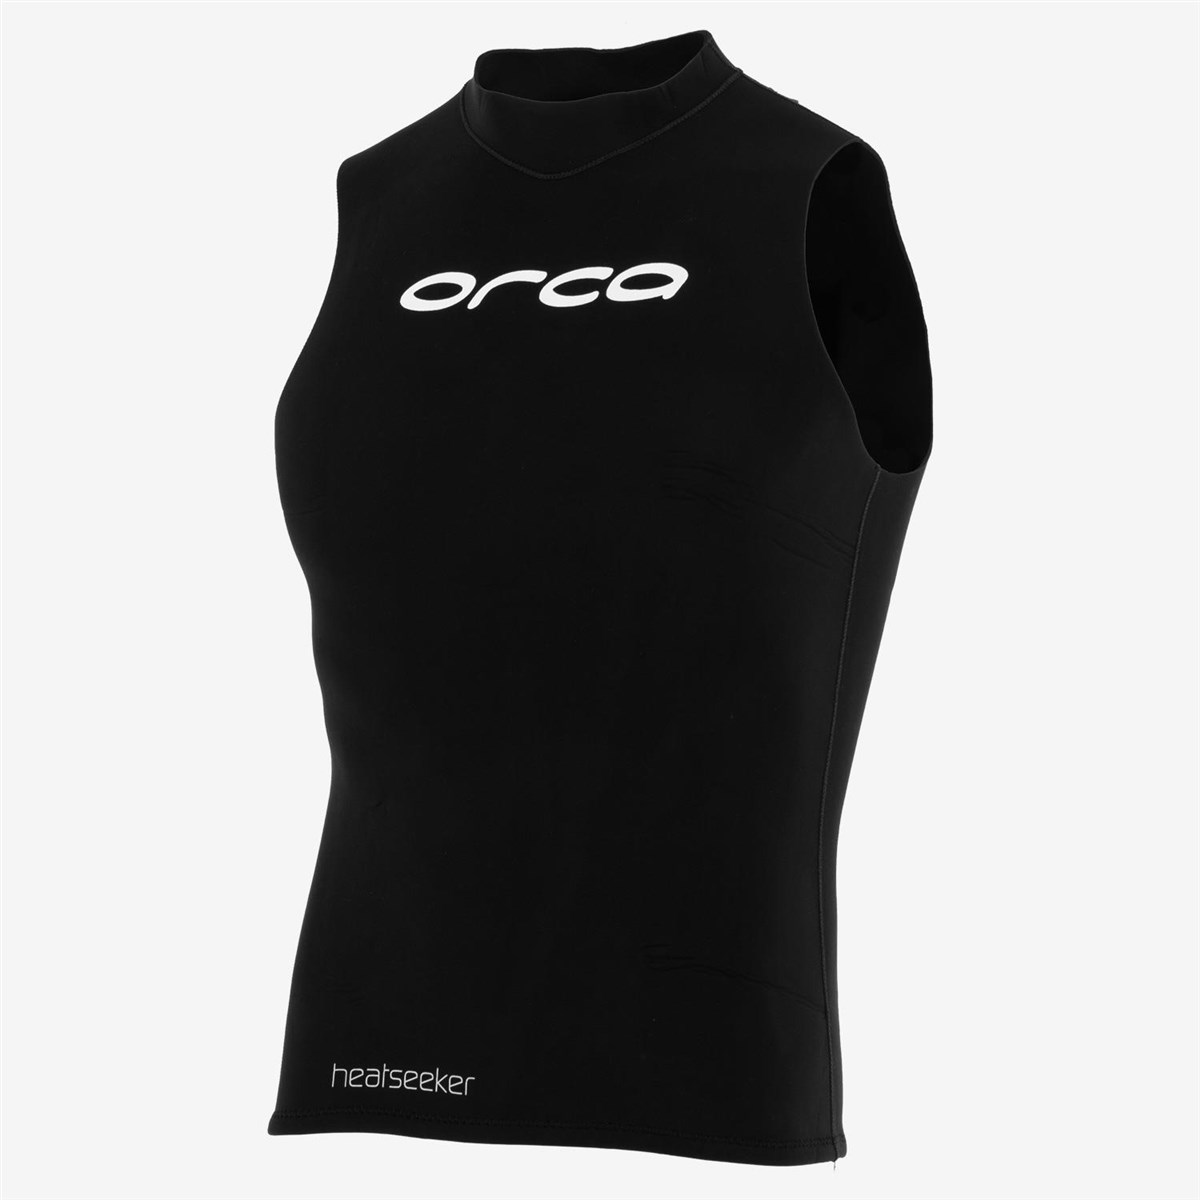 Orca Heatseeker Vest product image